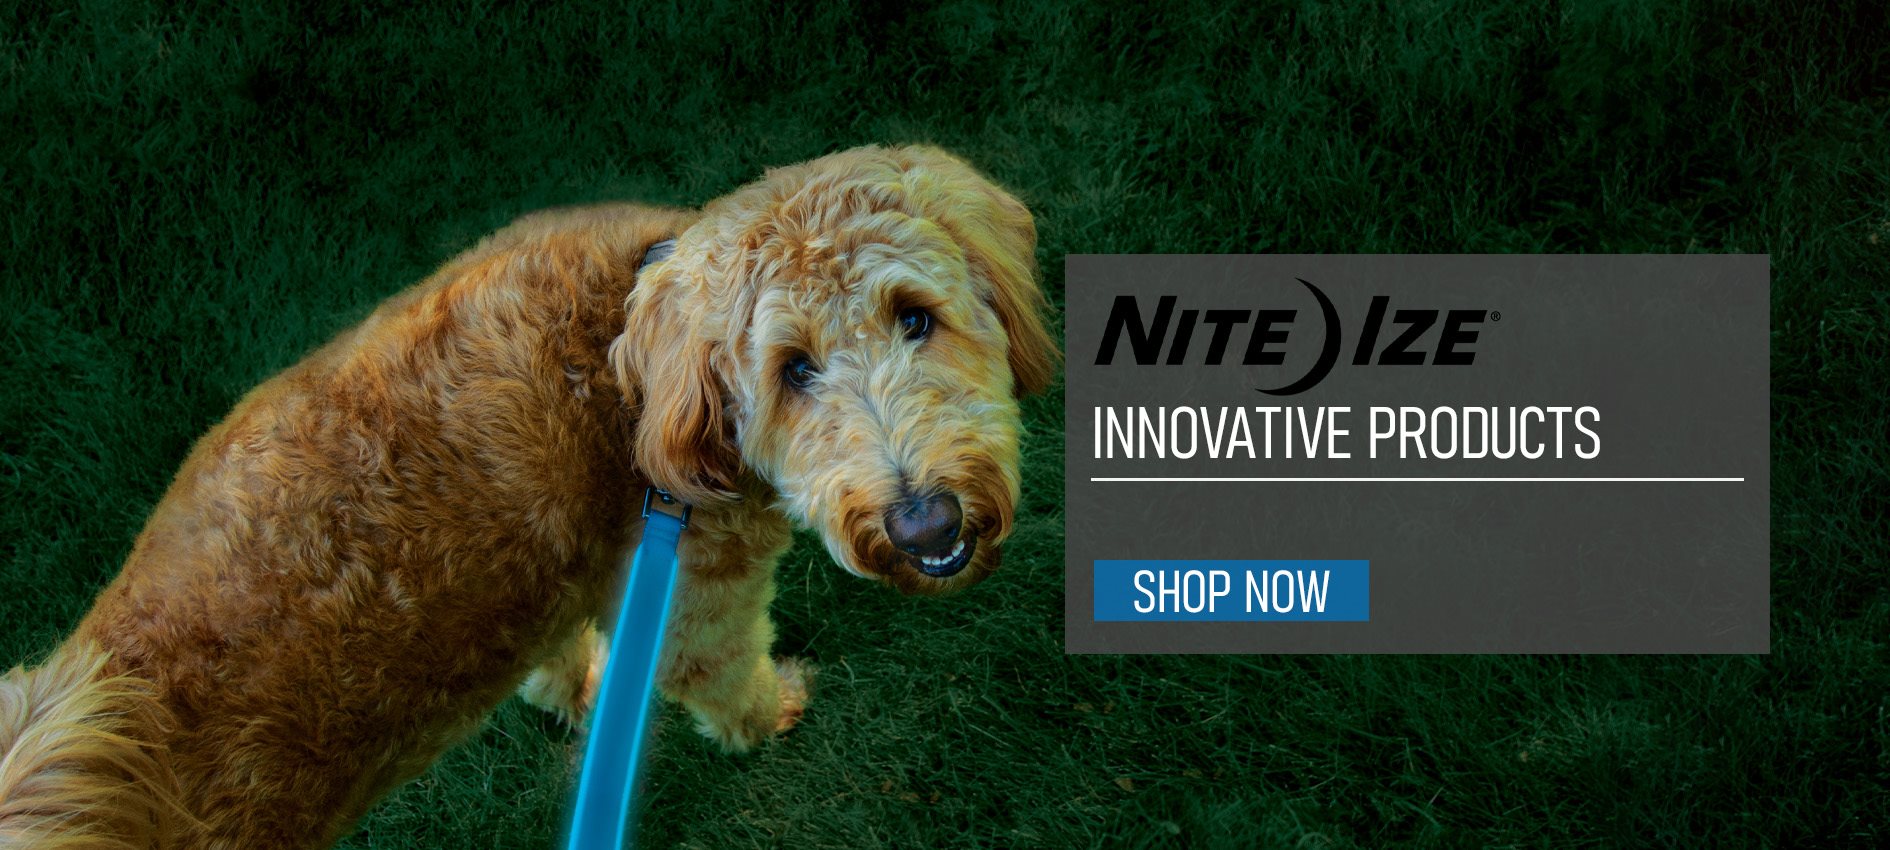 Nite Ize NiteDog Rechargeable LED Leash light up leash for dogs